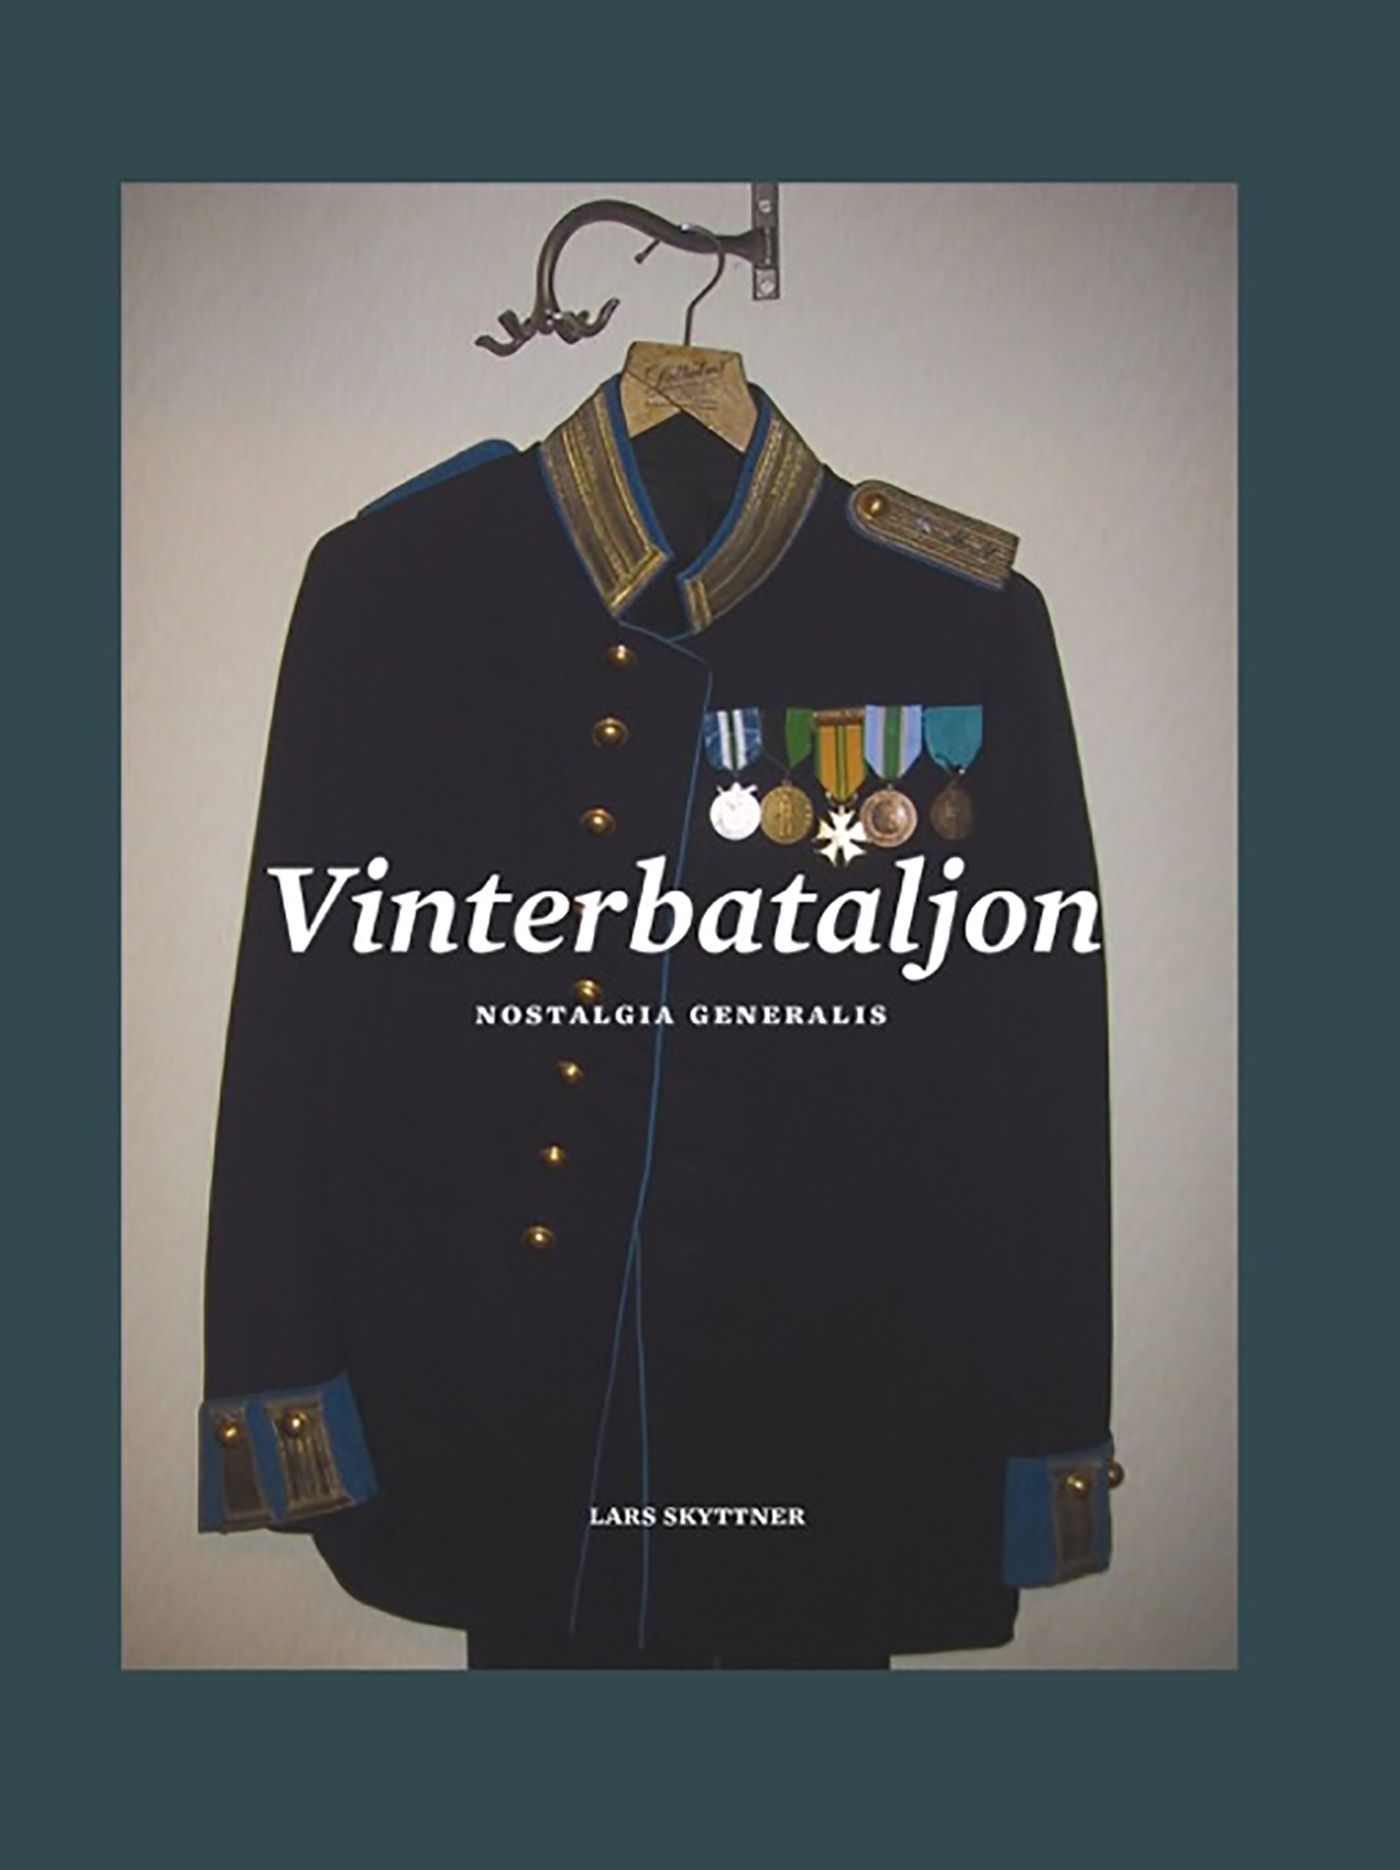 Vinterbataljon, e-bog af Lars Skyttner